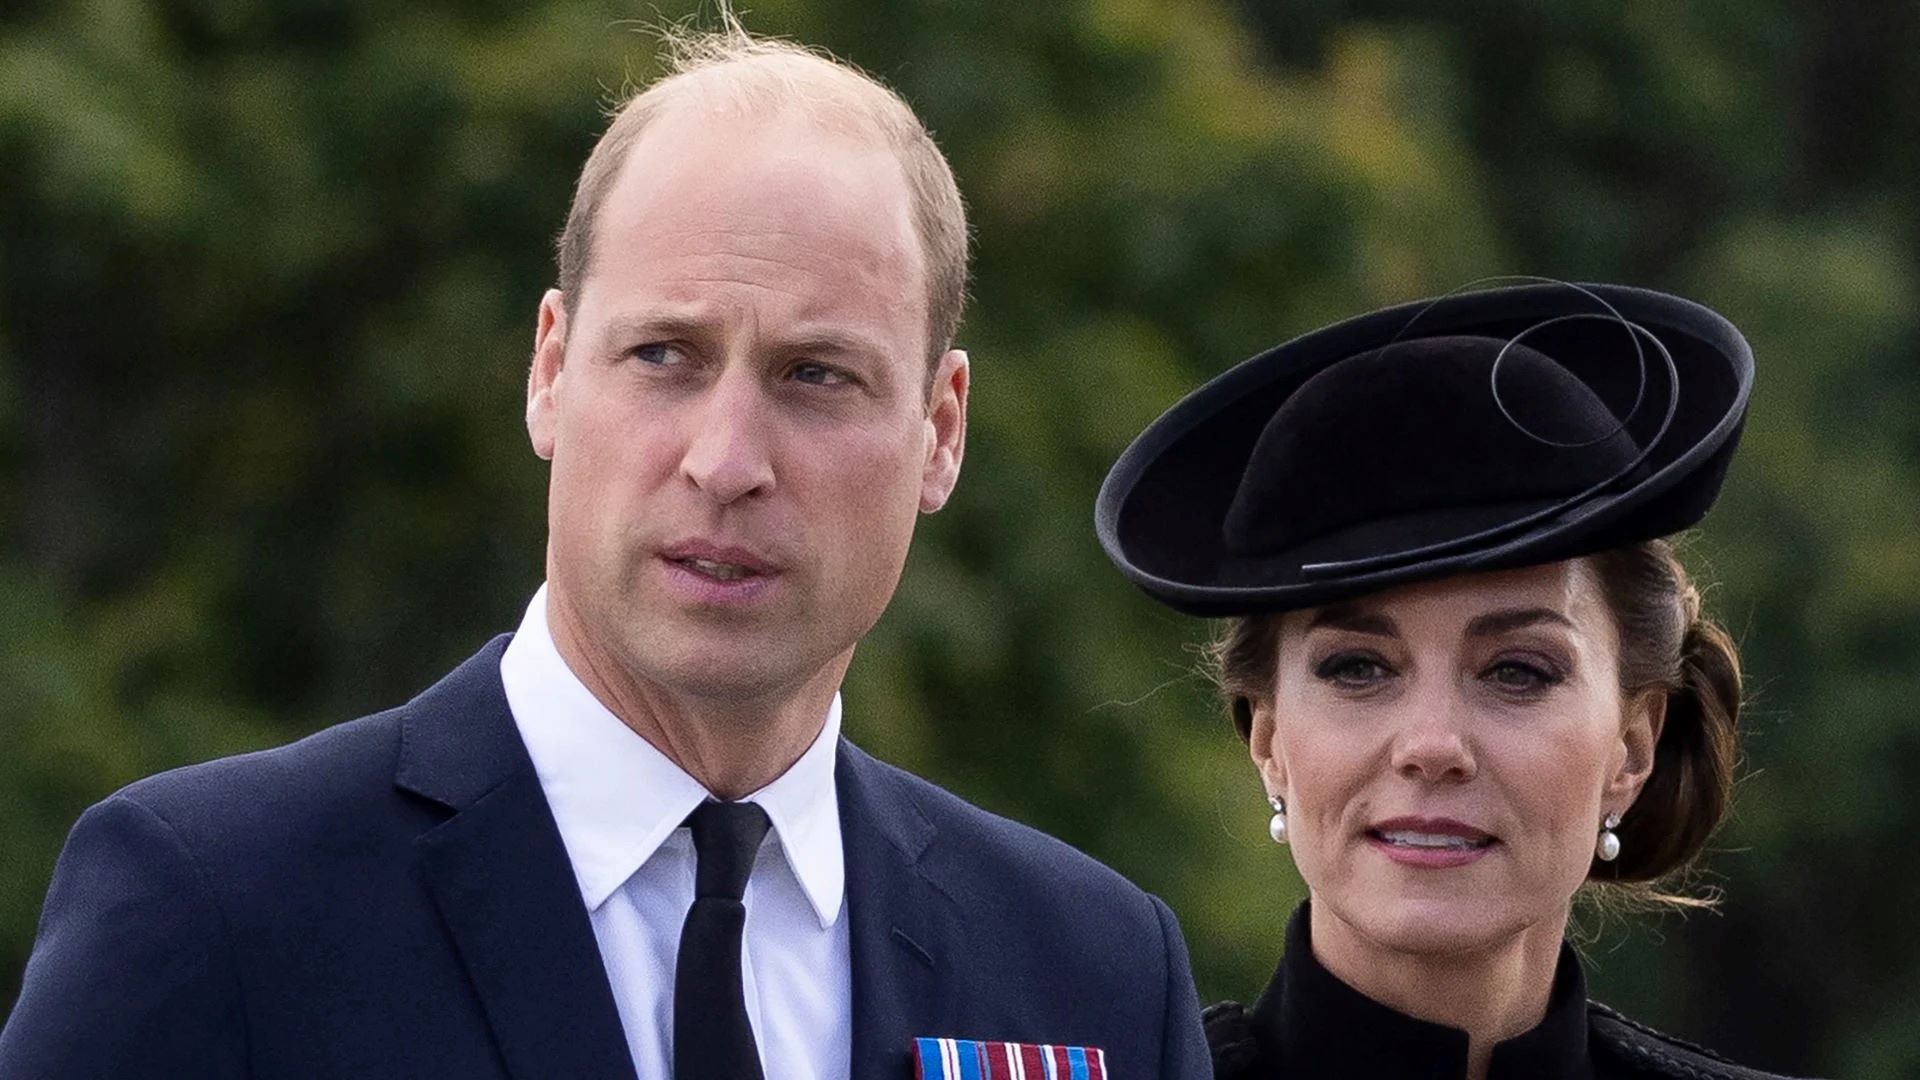 Prince William Visits Kate Middleton in Hospital | CitizenSide